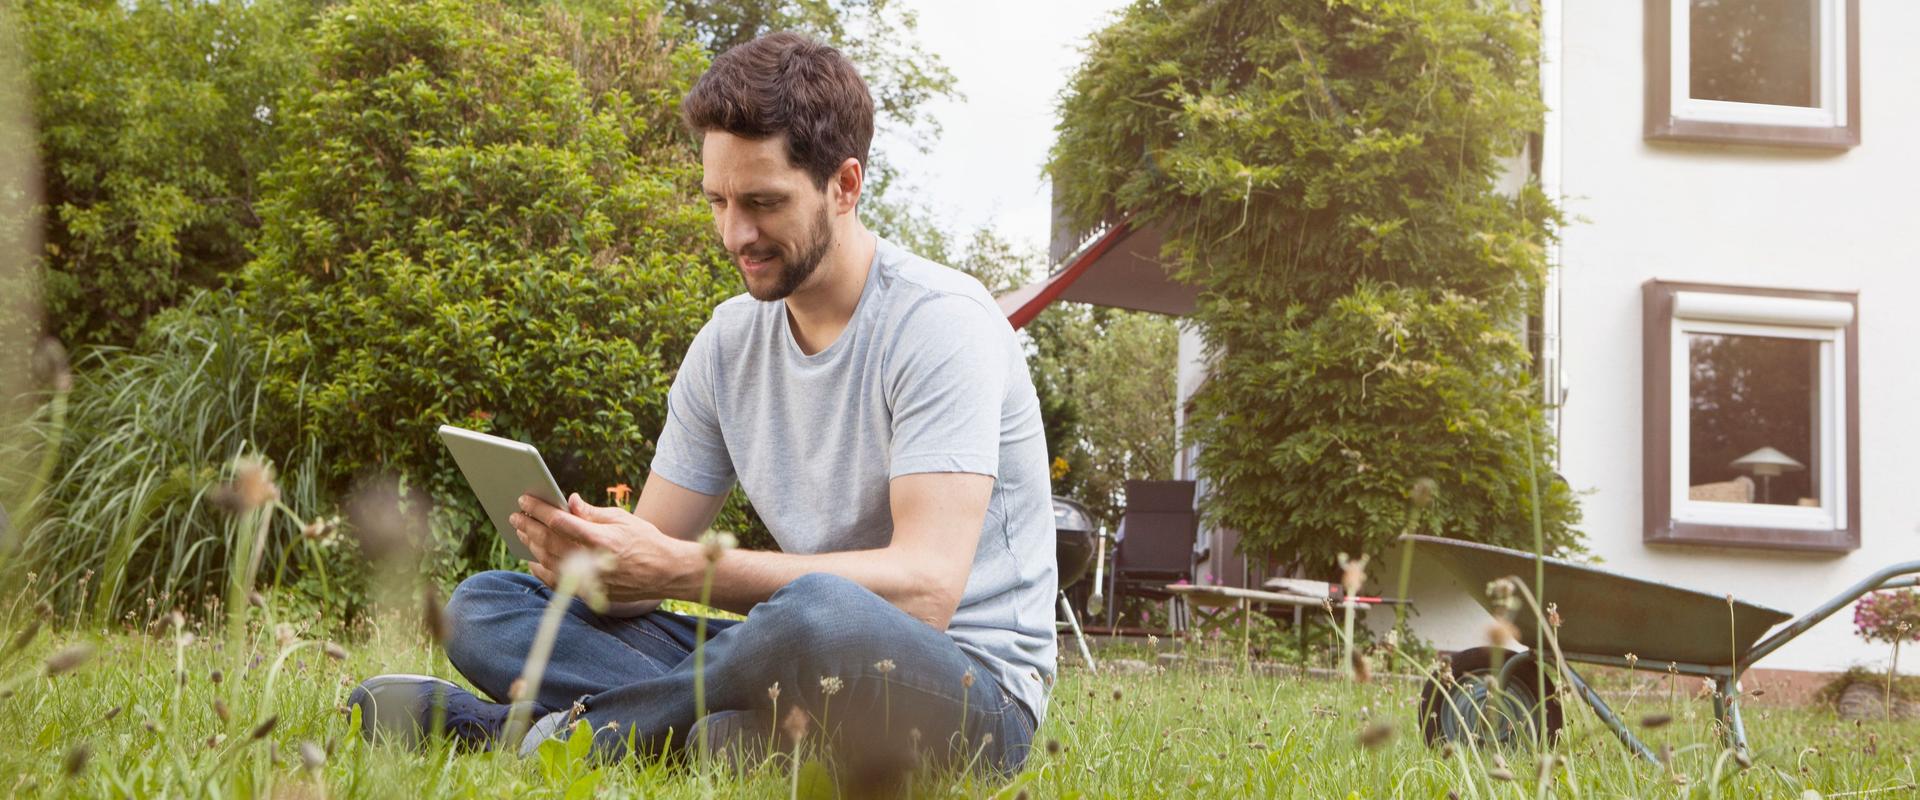 Man sitting in garden using digital tablet